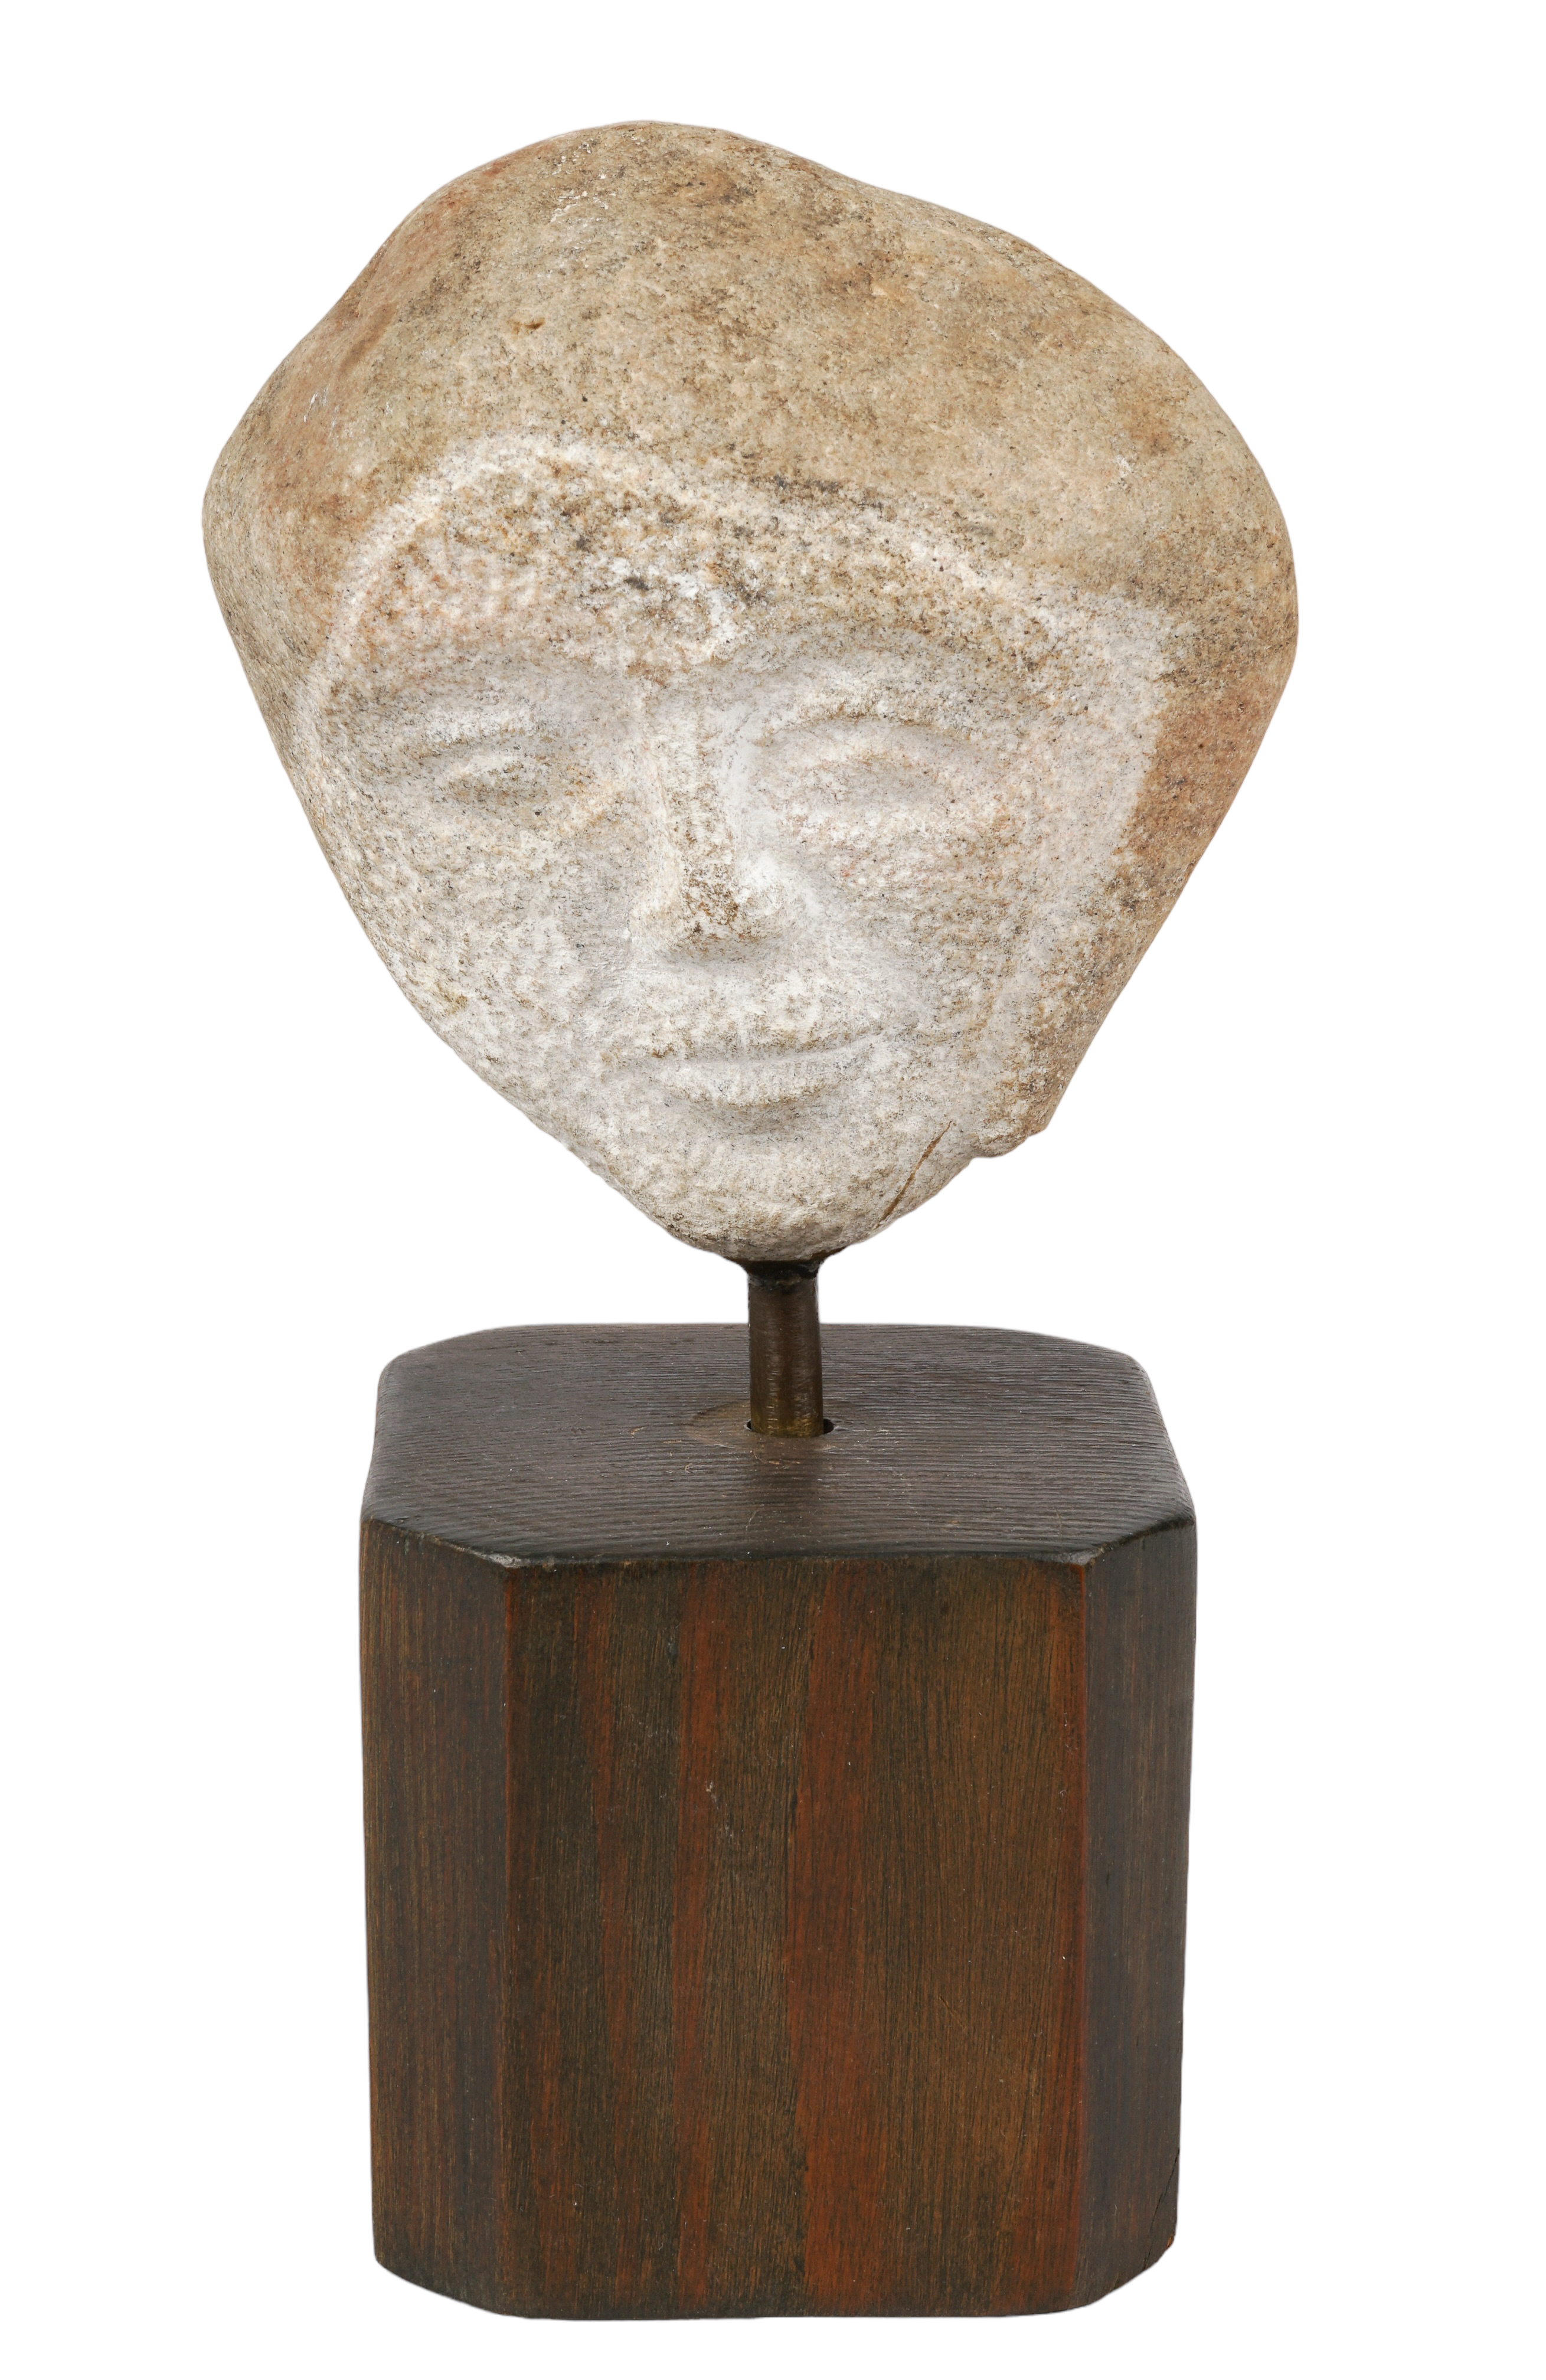 Carved stone head sculpture unsigned  2e23f4